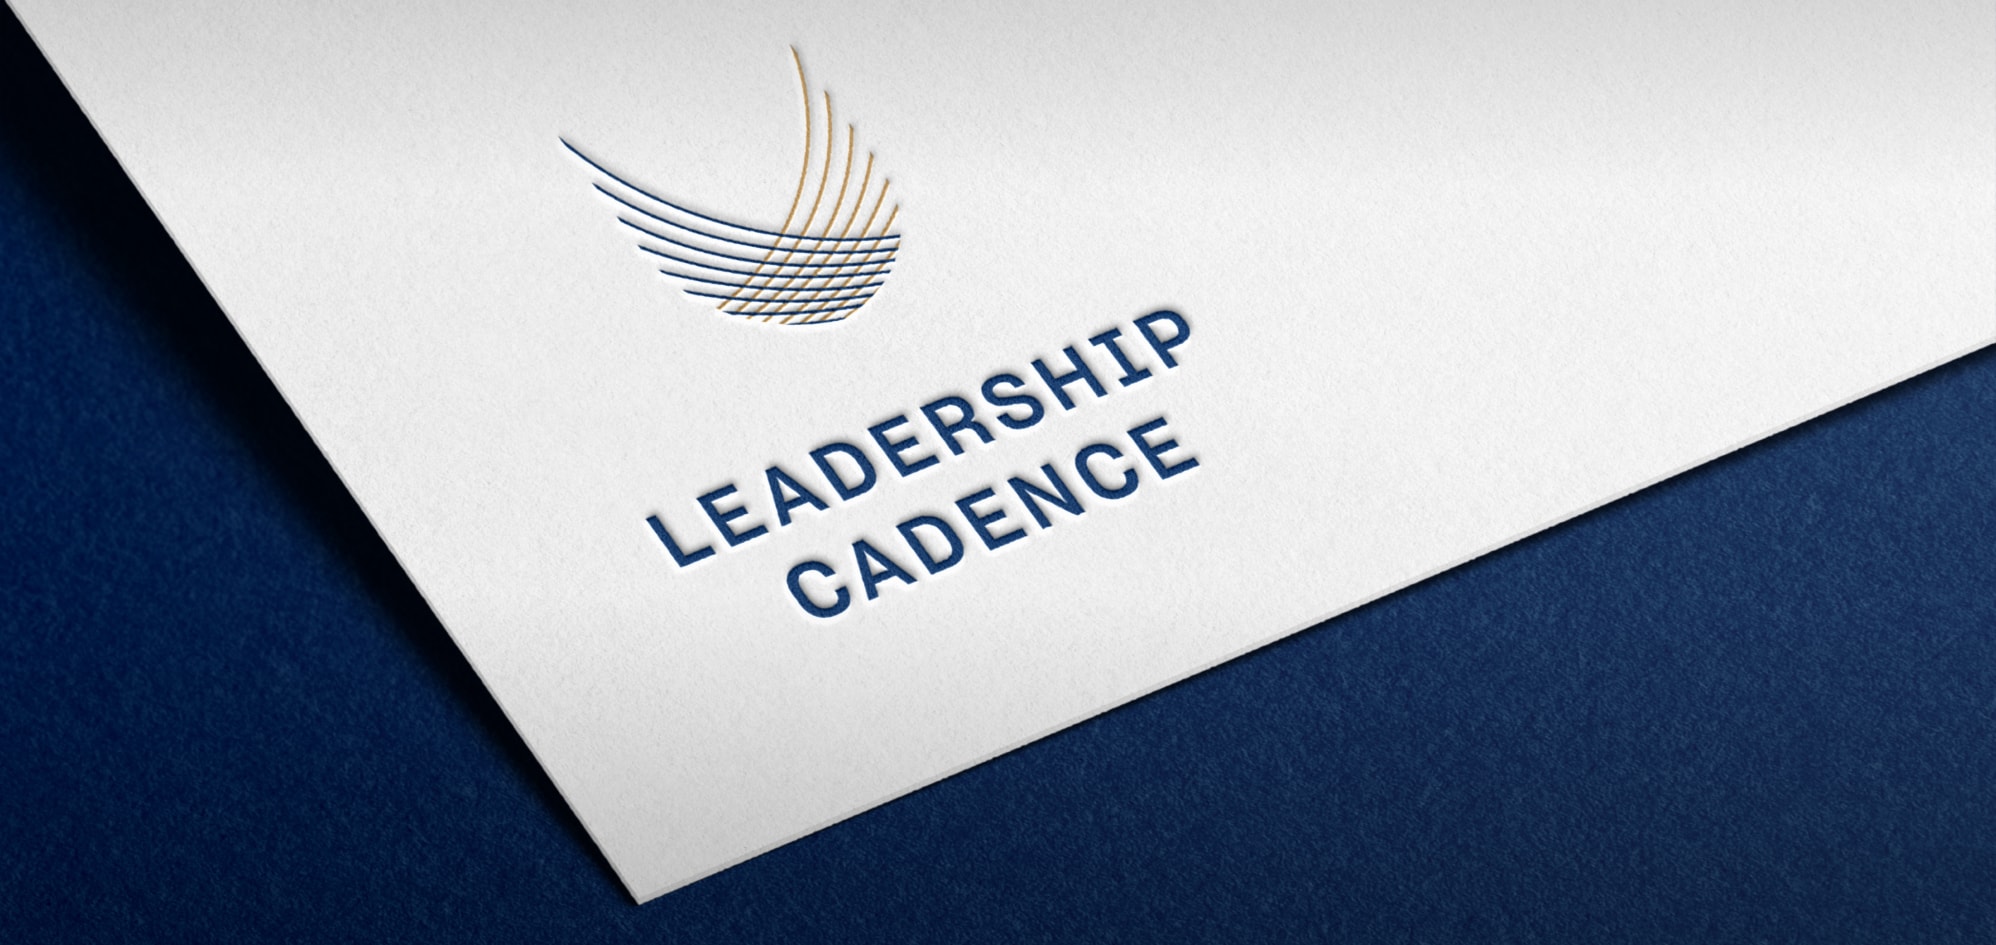 nfn-casestudy-leadership-cadence-hero-l